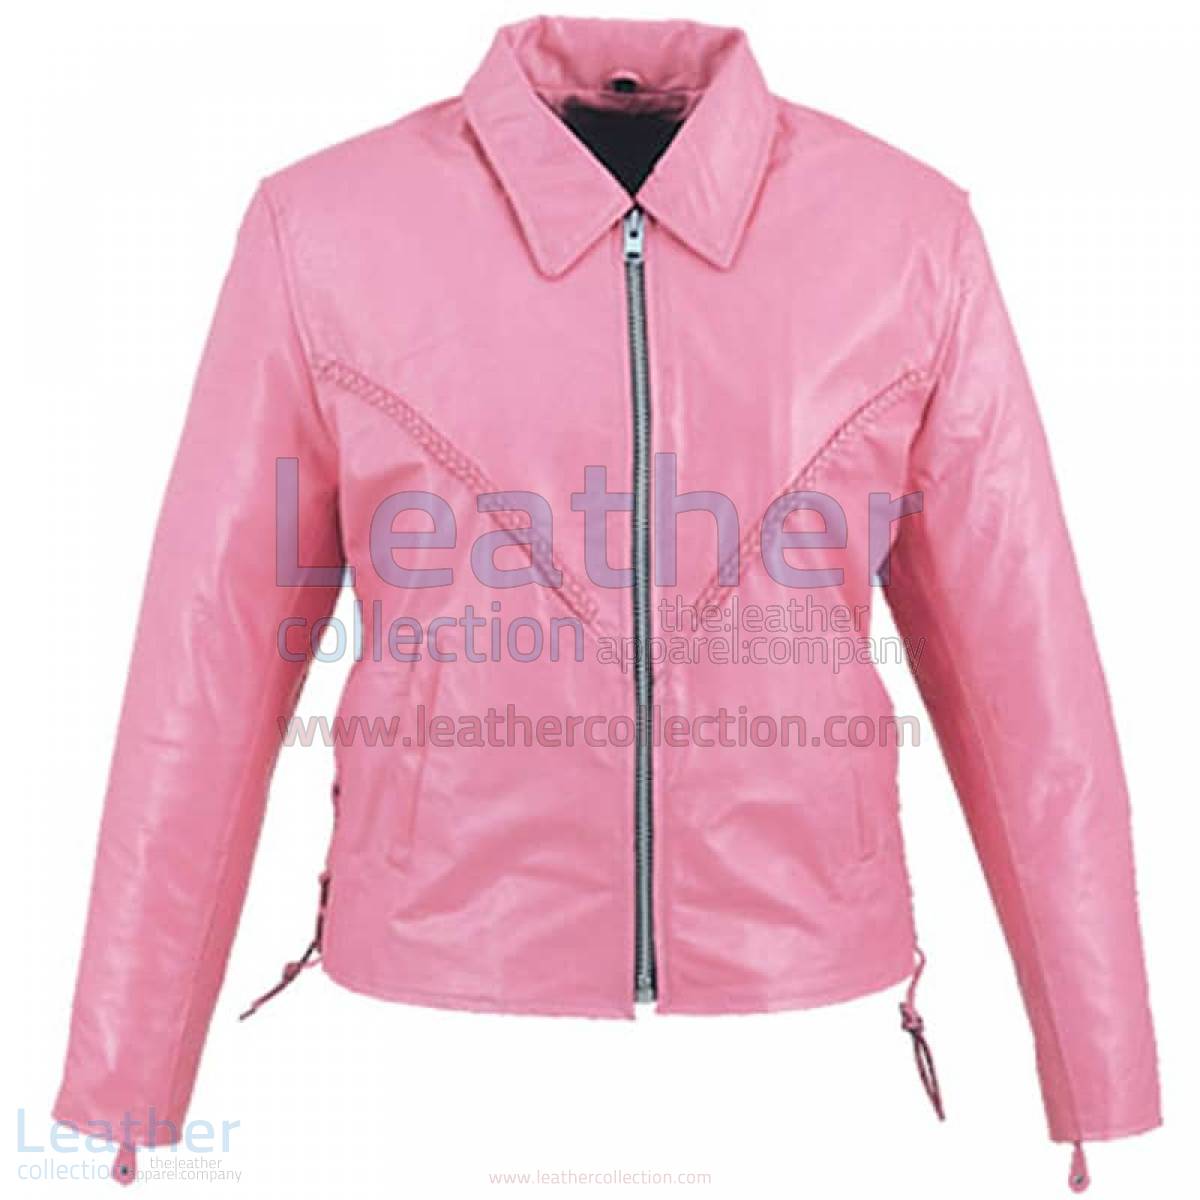 stylish leather jackets for ladies